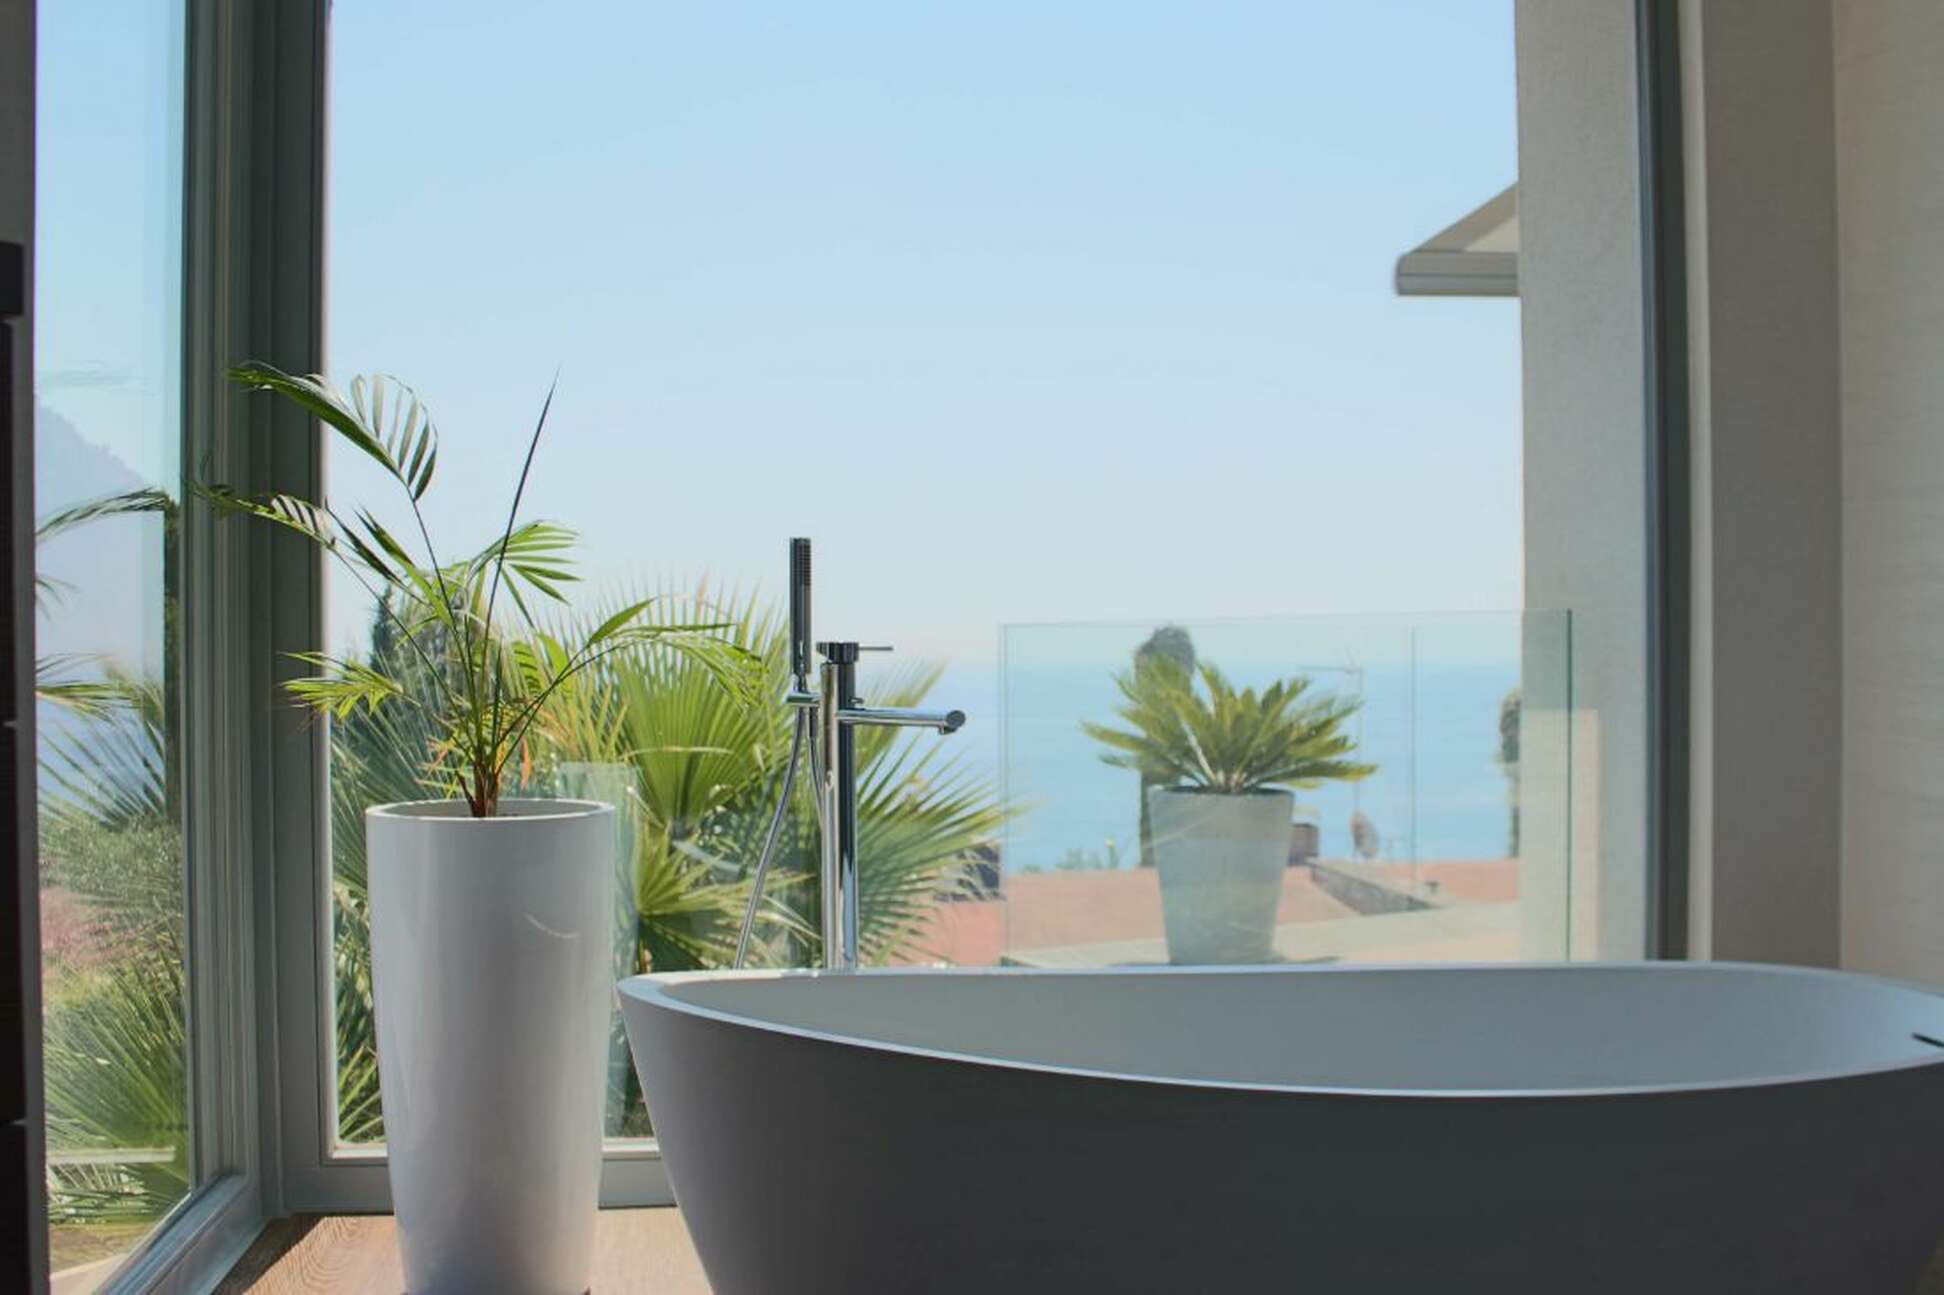 Exklusives Haus mit atemberaubendem Meerblick in Tossa de Mar, jetzt verfügbar.